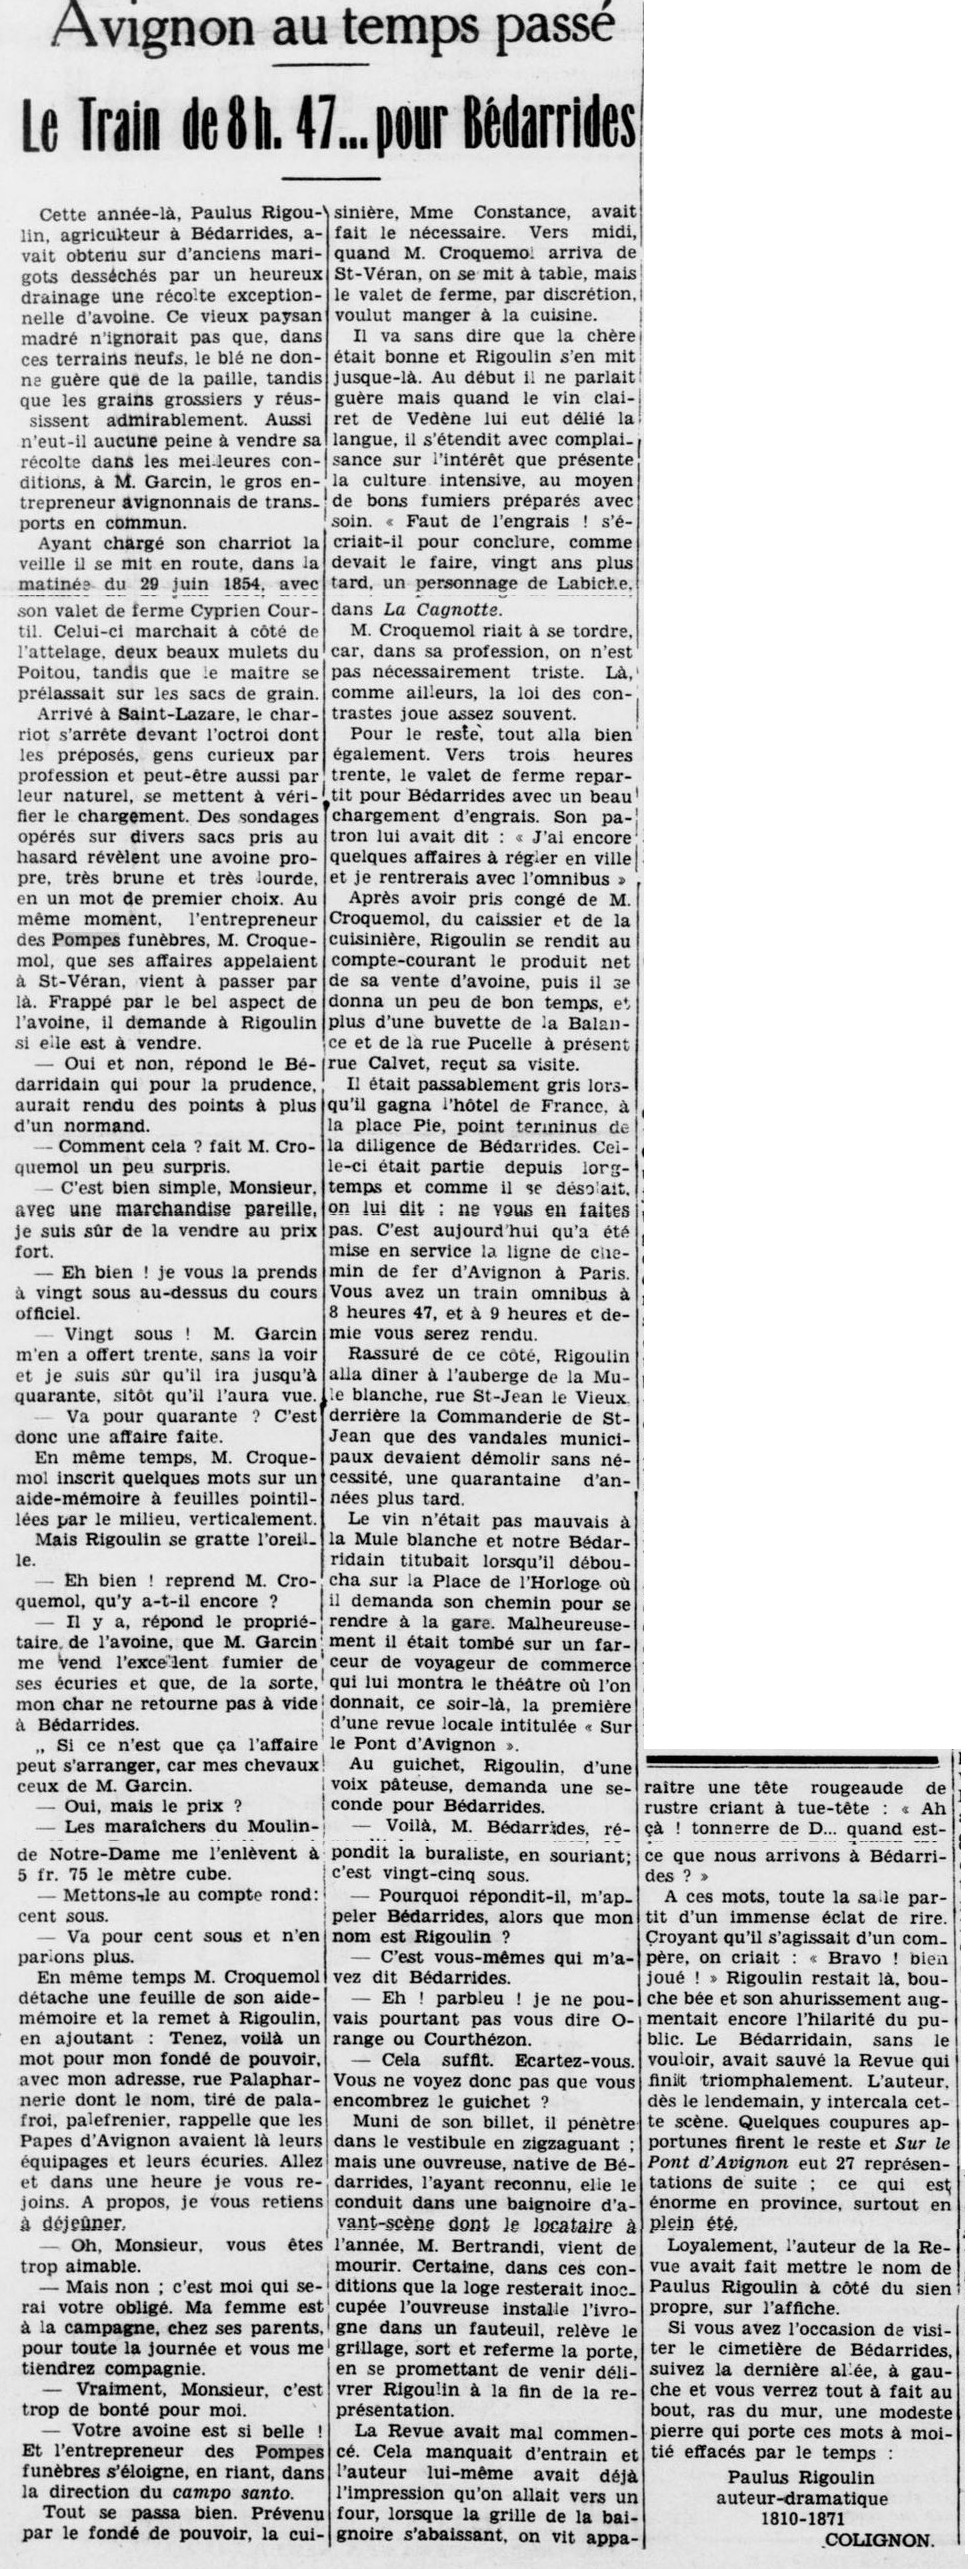 1934-2-12_semaine-mondaine_bedarrides.JPG